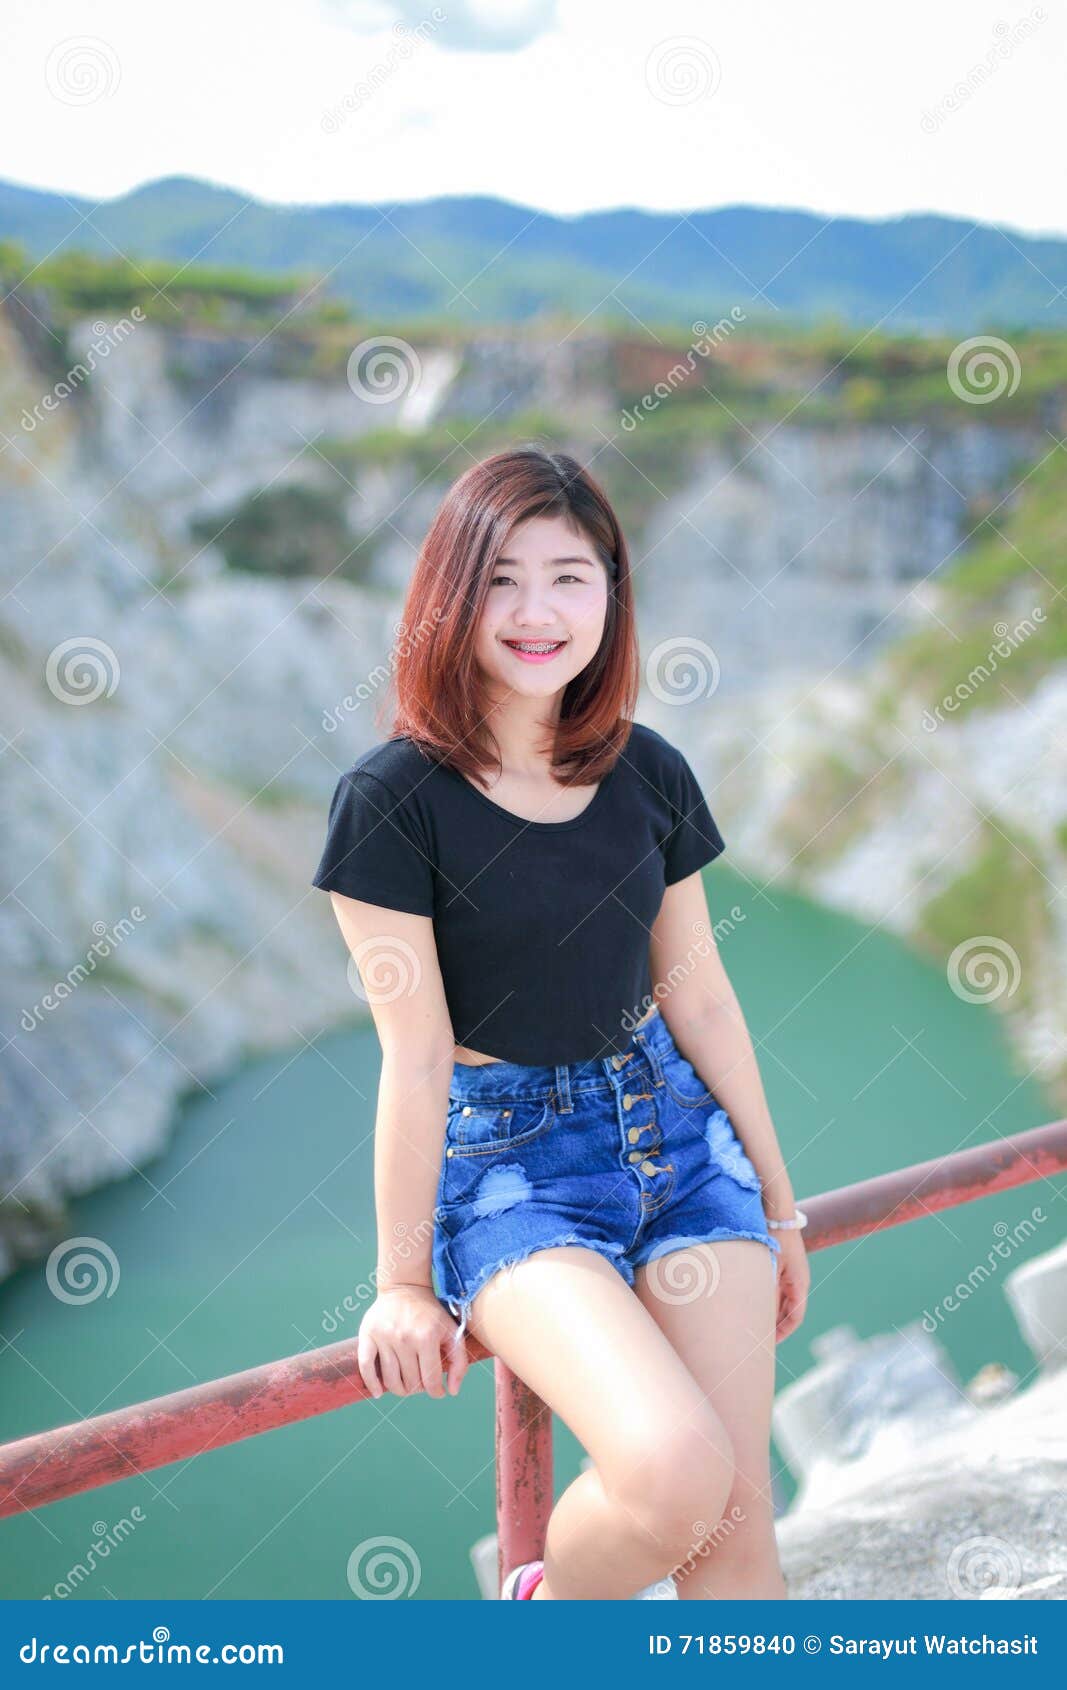 april yabut recommends Thai Girl Photos